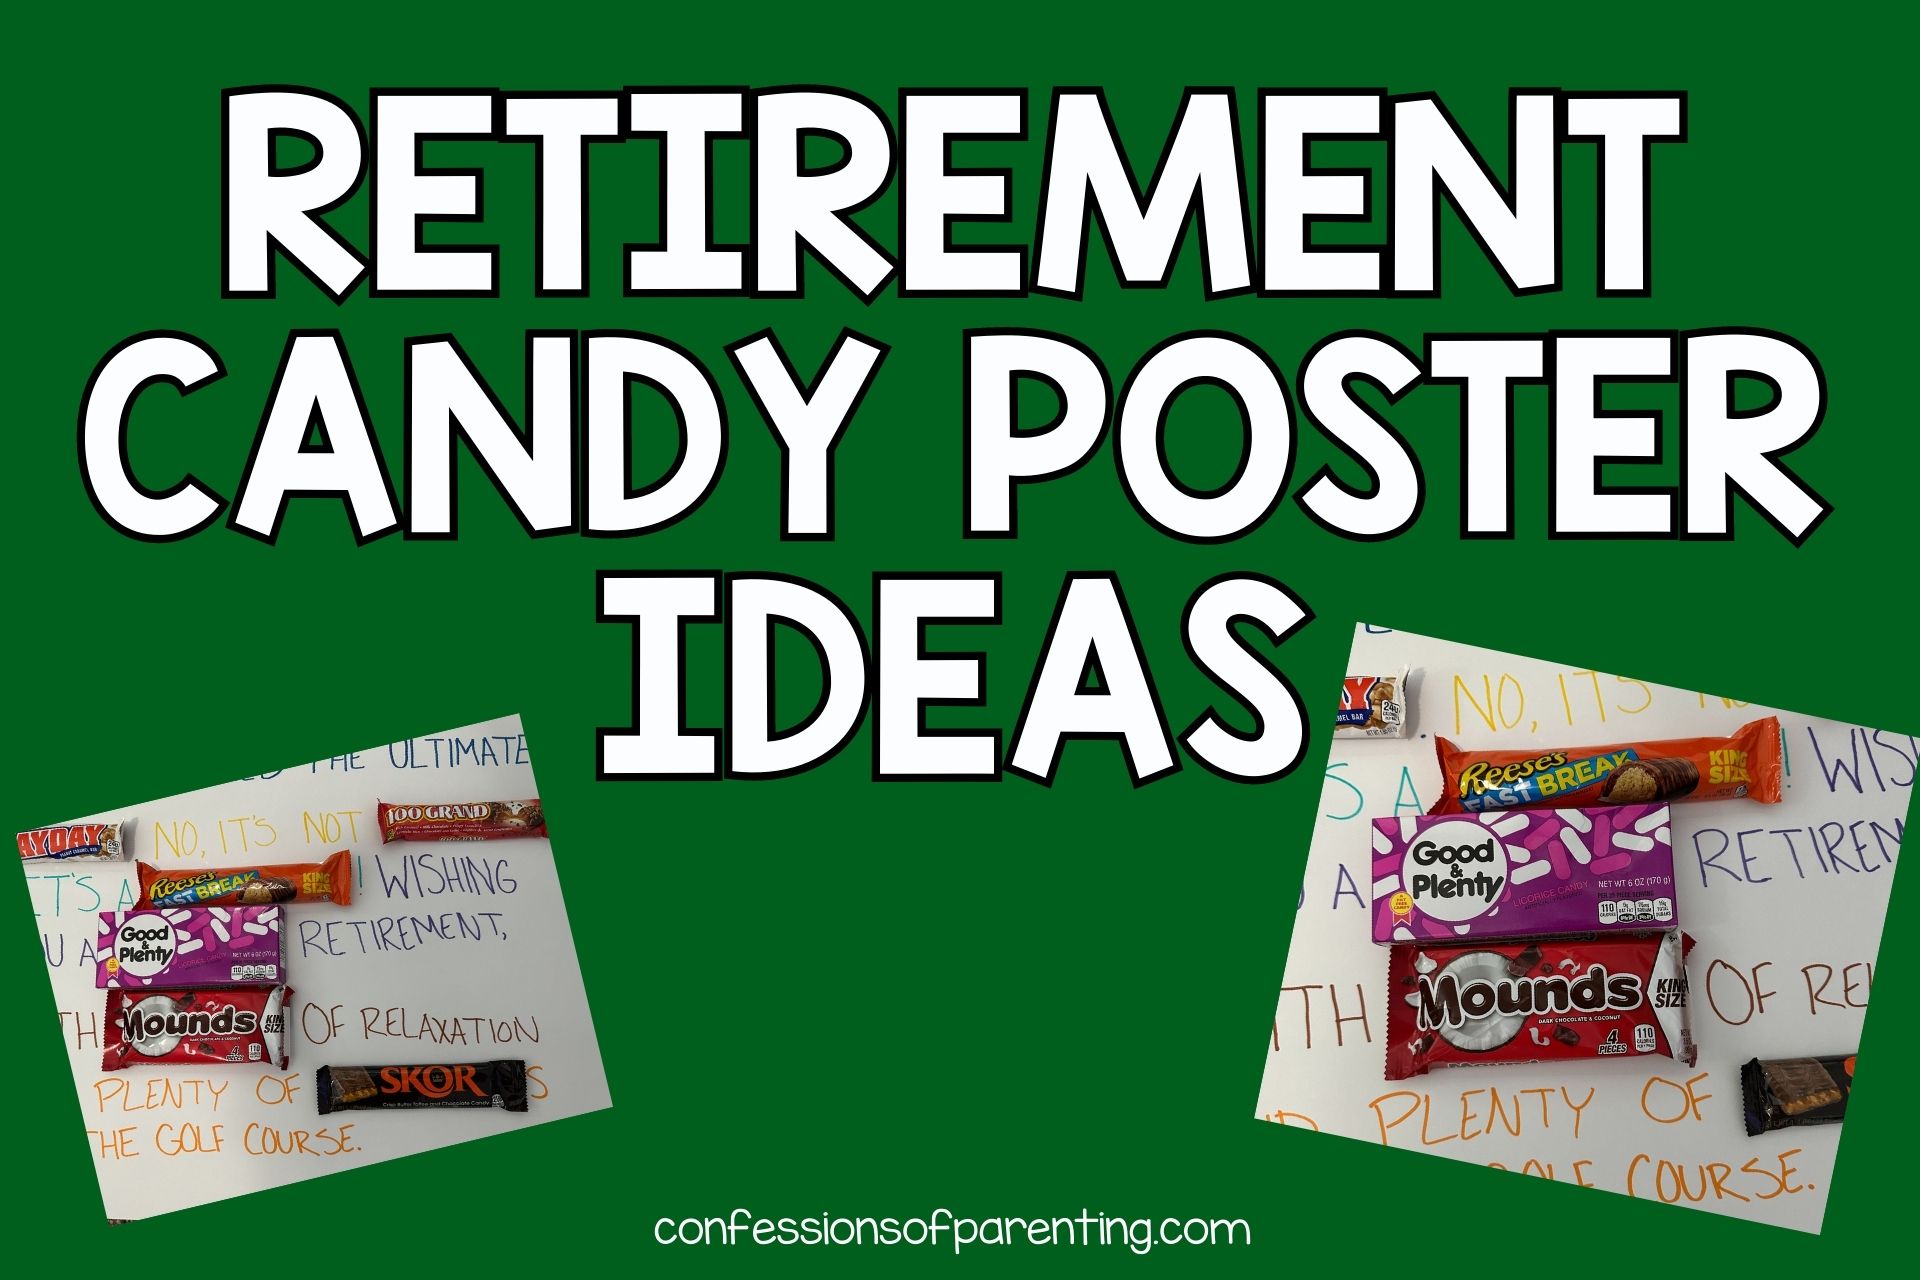 retirement candy poster ideas.jpg